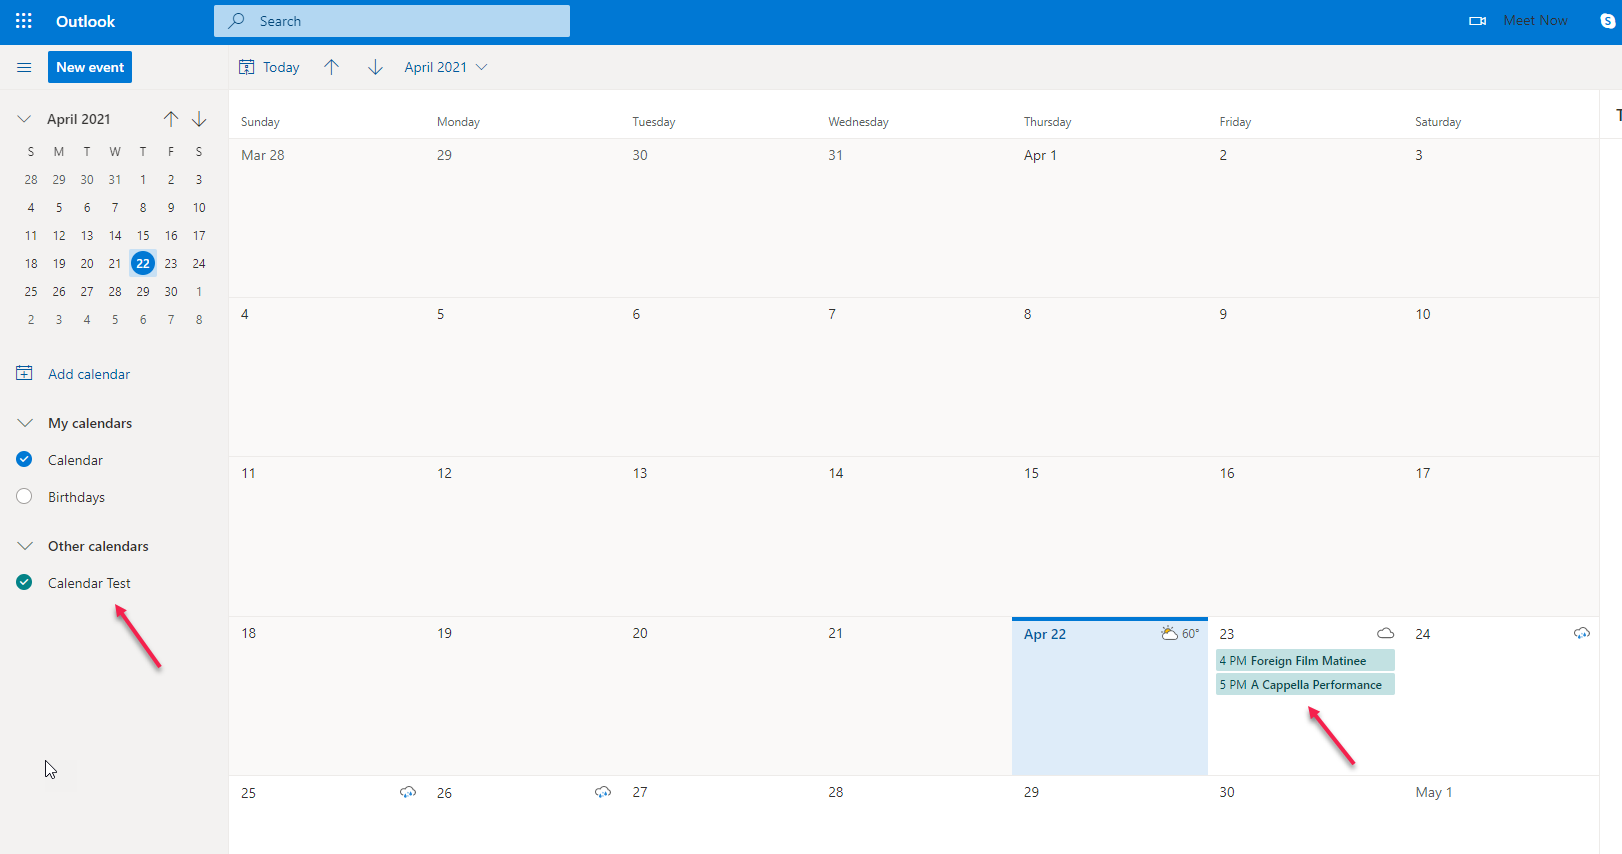 Subscribed Calendar in Microsoft Outlook 365